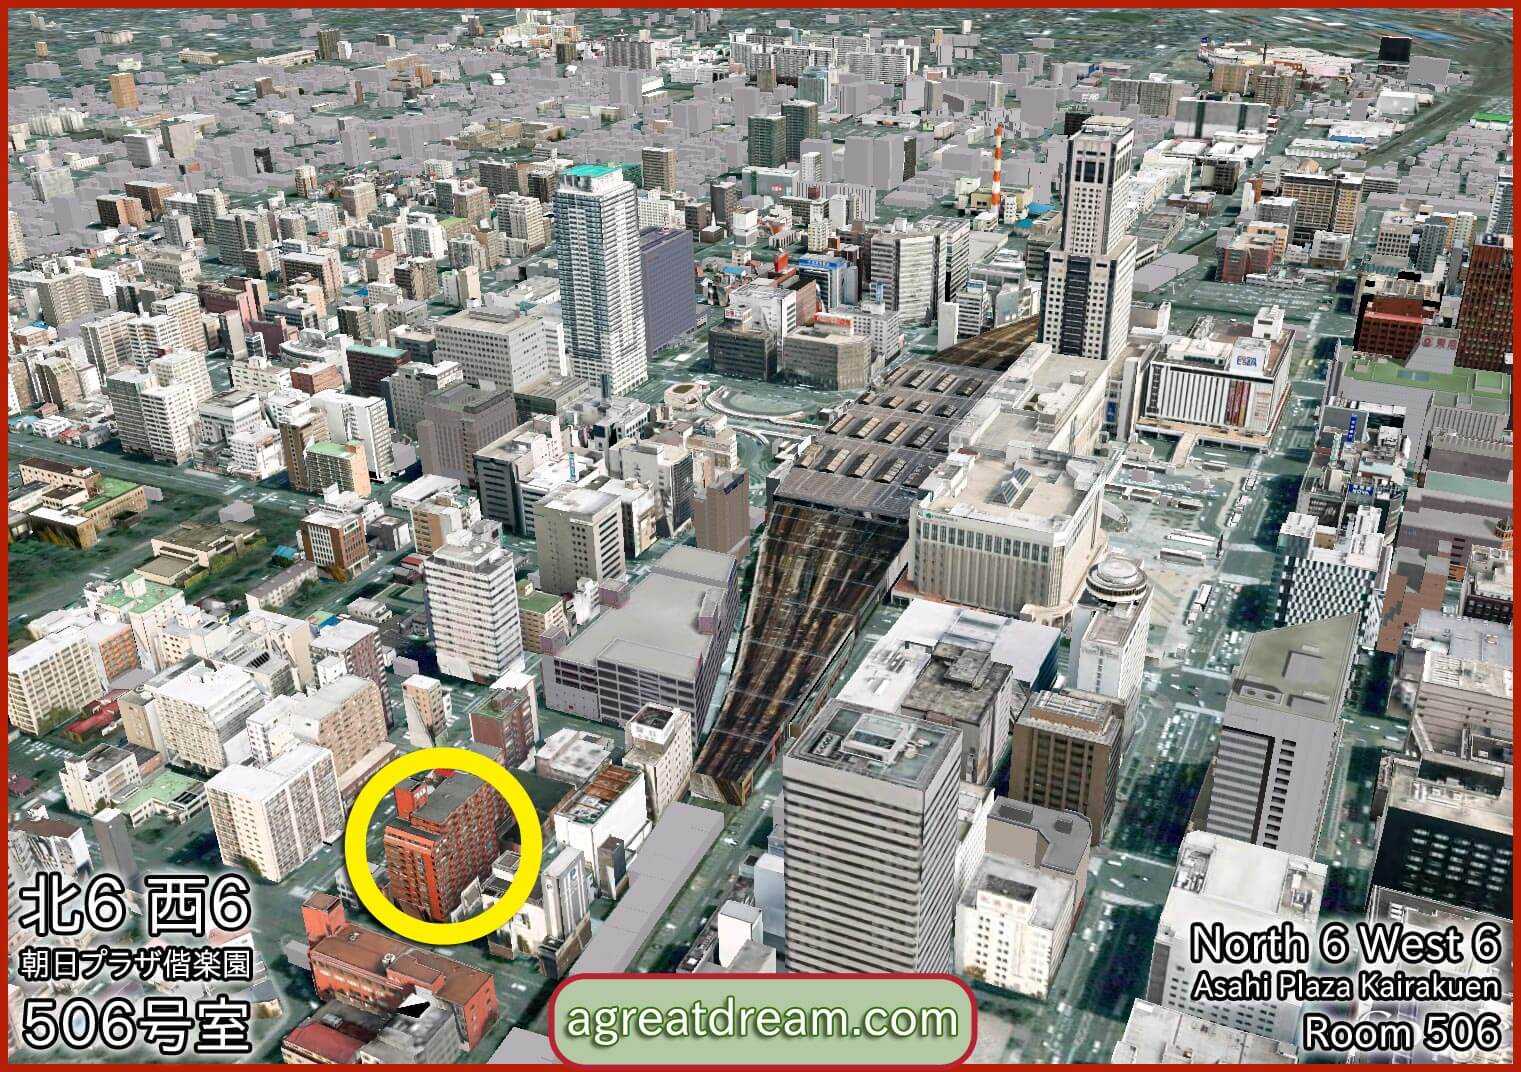 Company Profile: Map Sapporo Eikaiwa agreatdream.com North 6 West 6, Asahi Plaza Kairakuen, Room 506